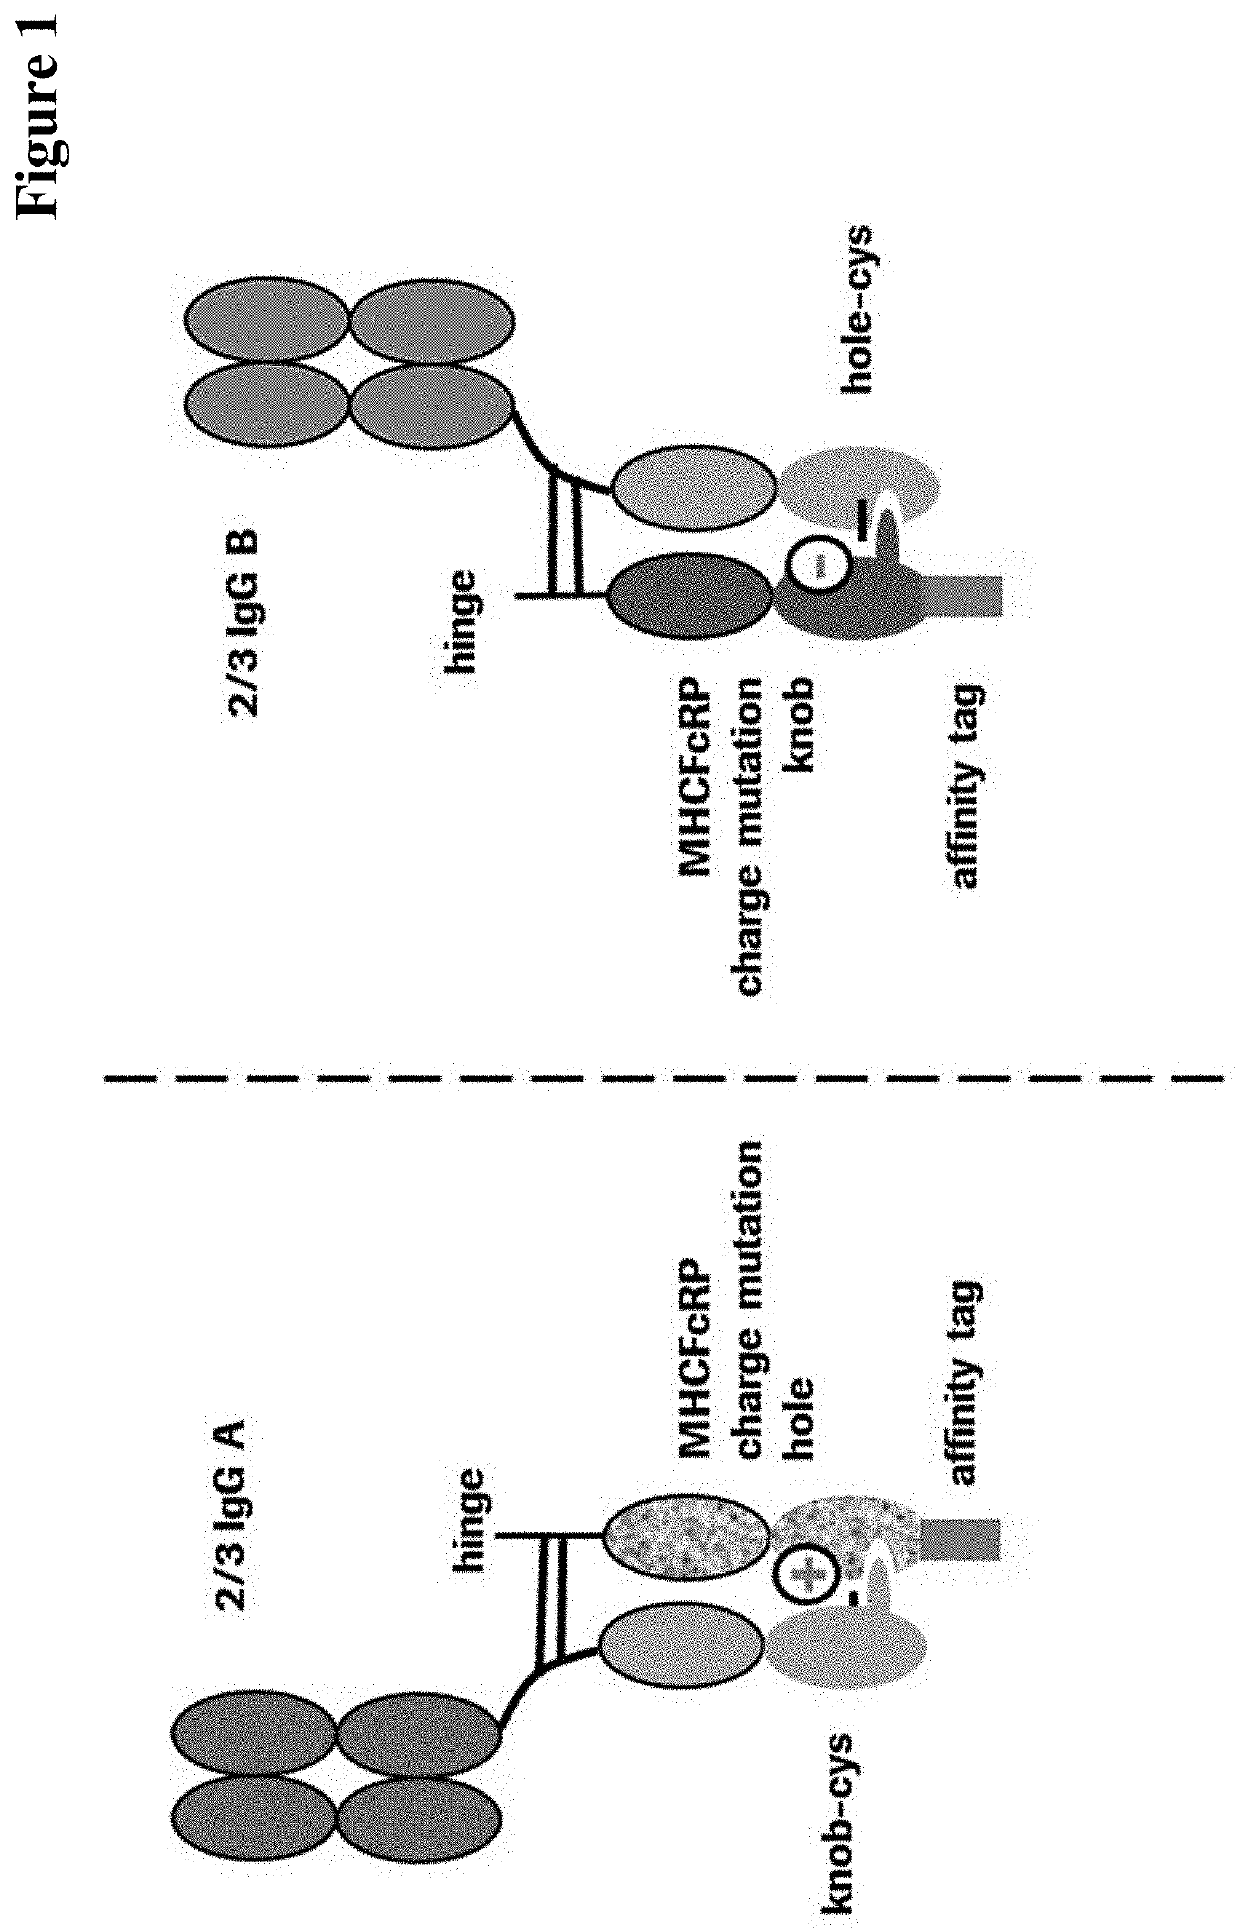 Method for generating multispecific antibodies from monospecific antibodies